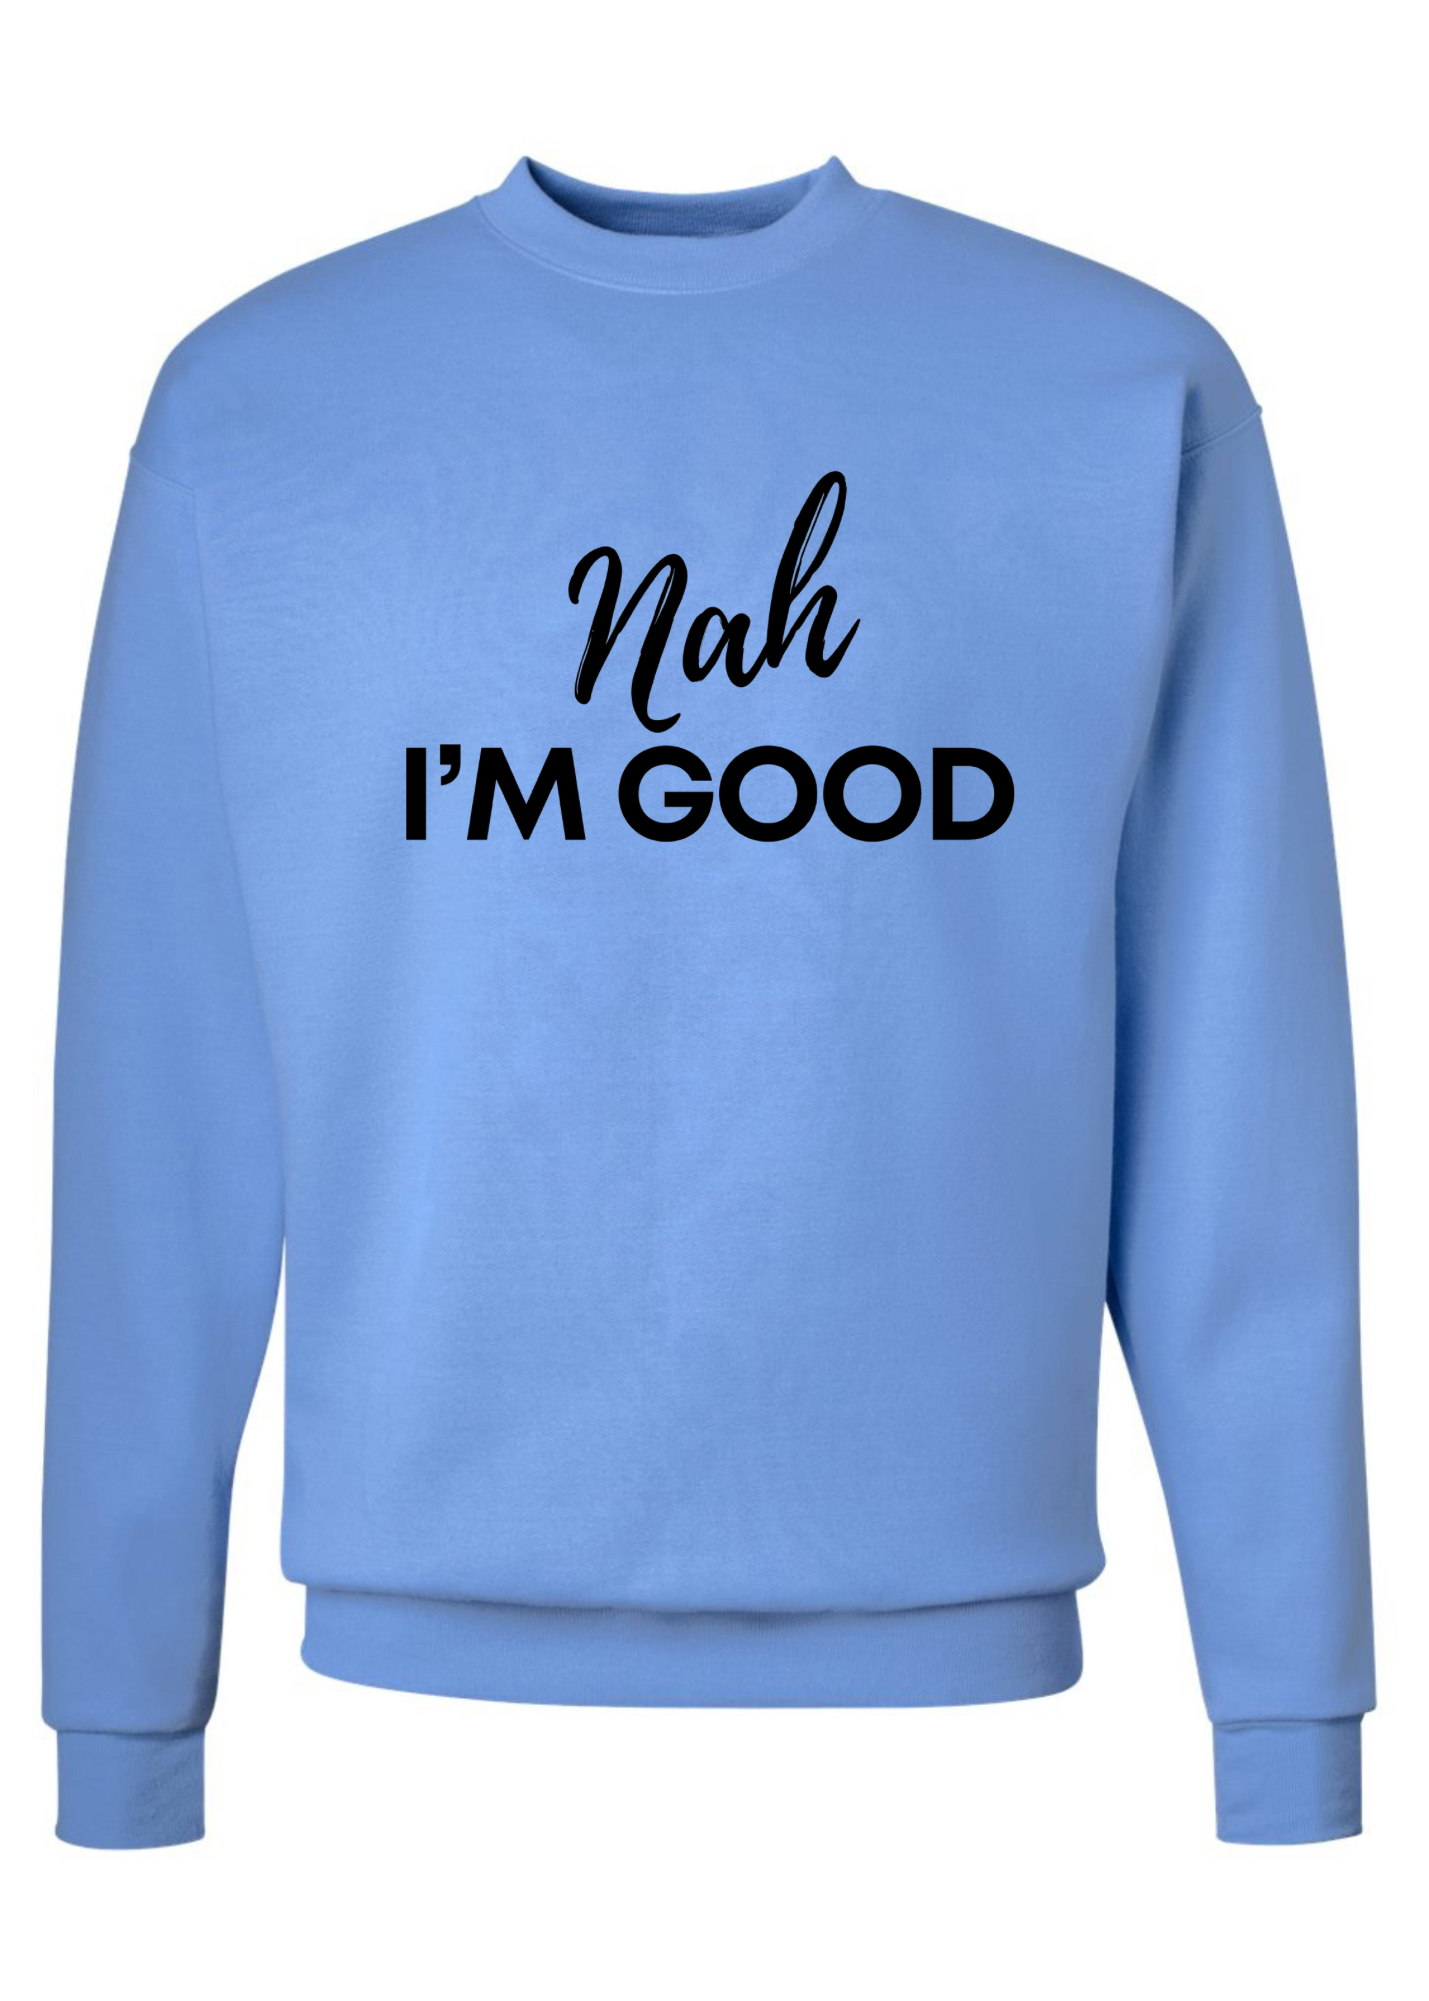 Nah I'm Good Crew Sweatshirt  - 3 colors available